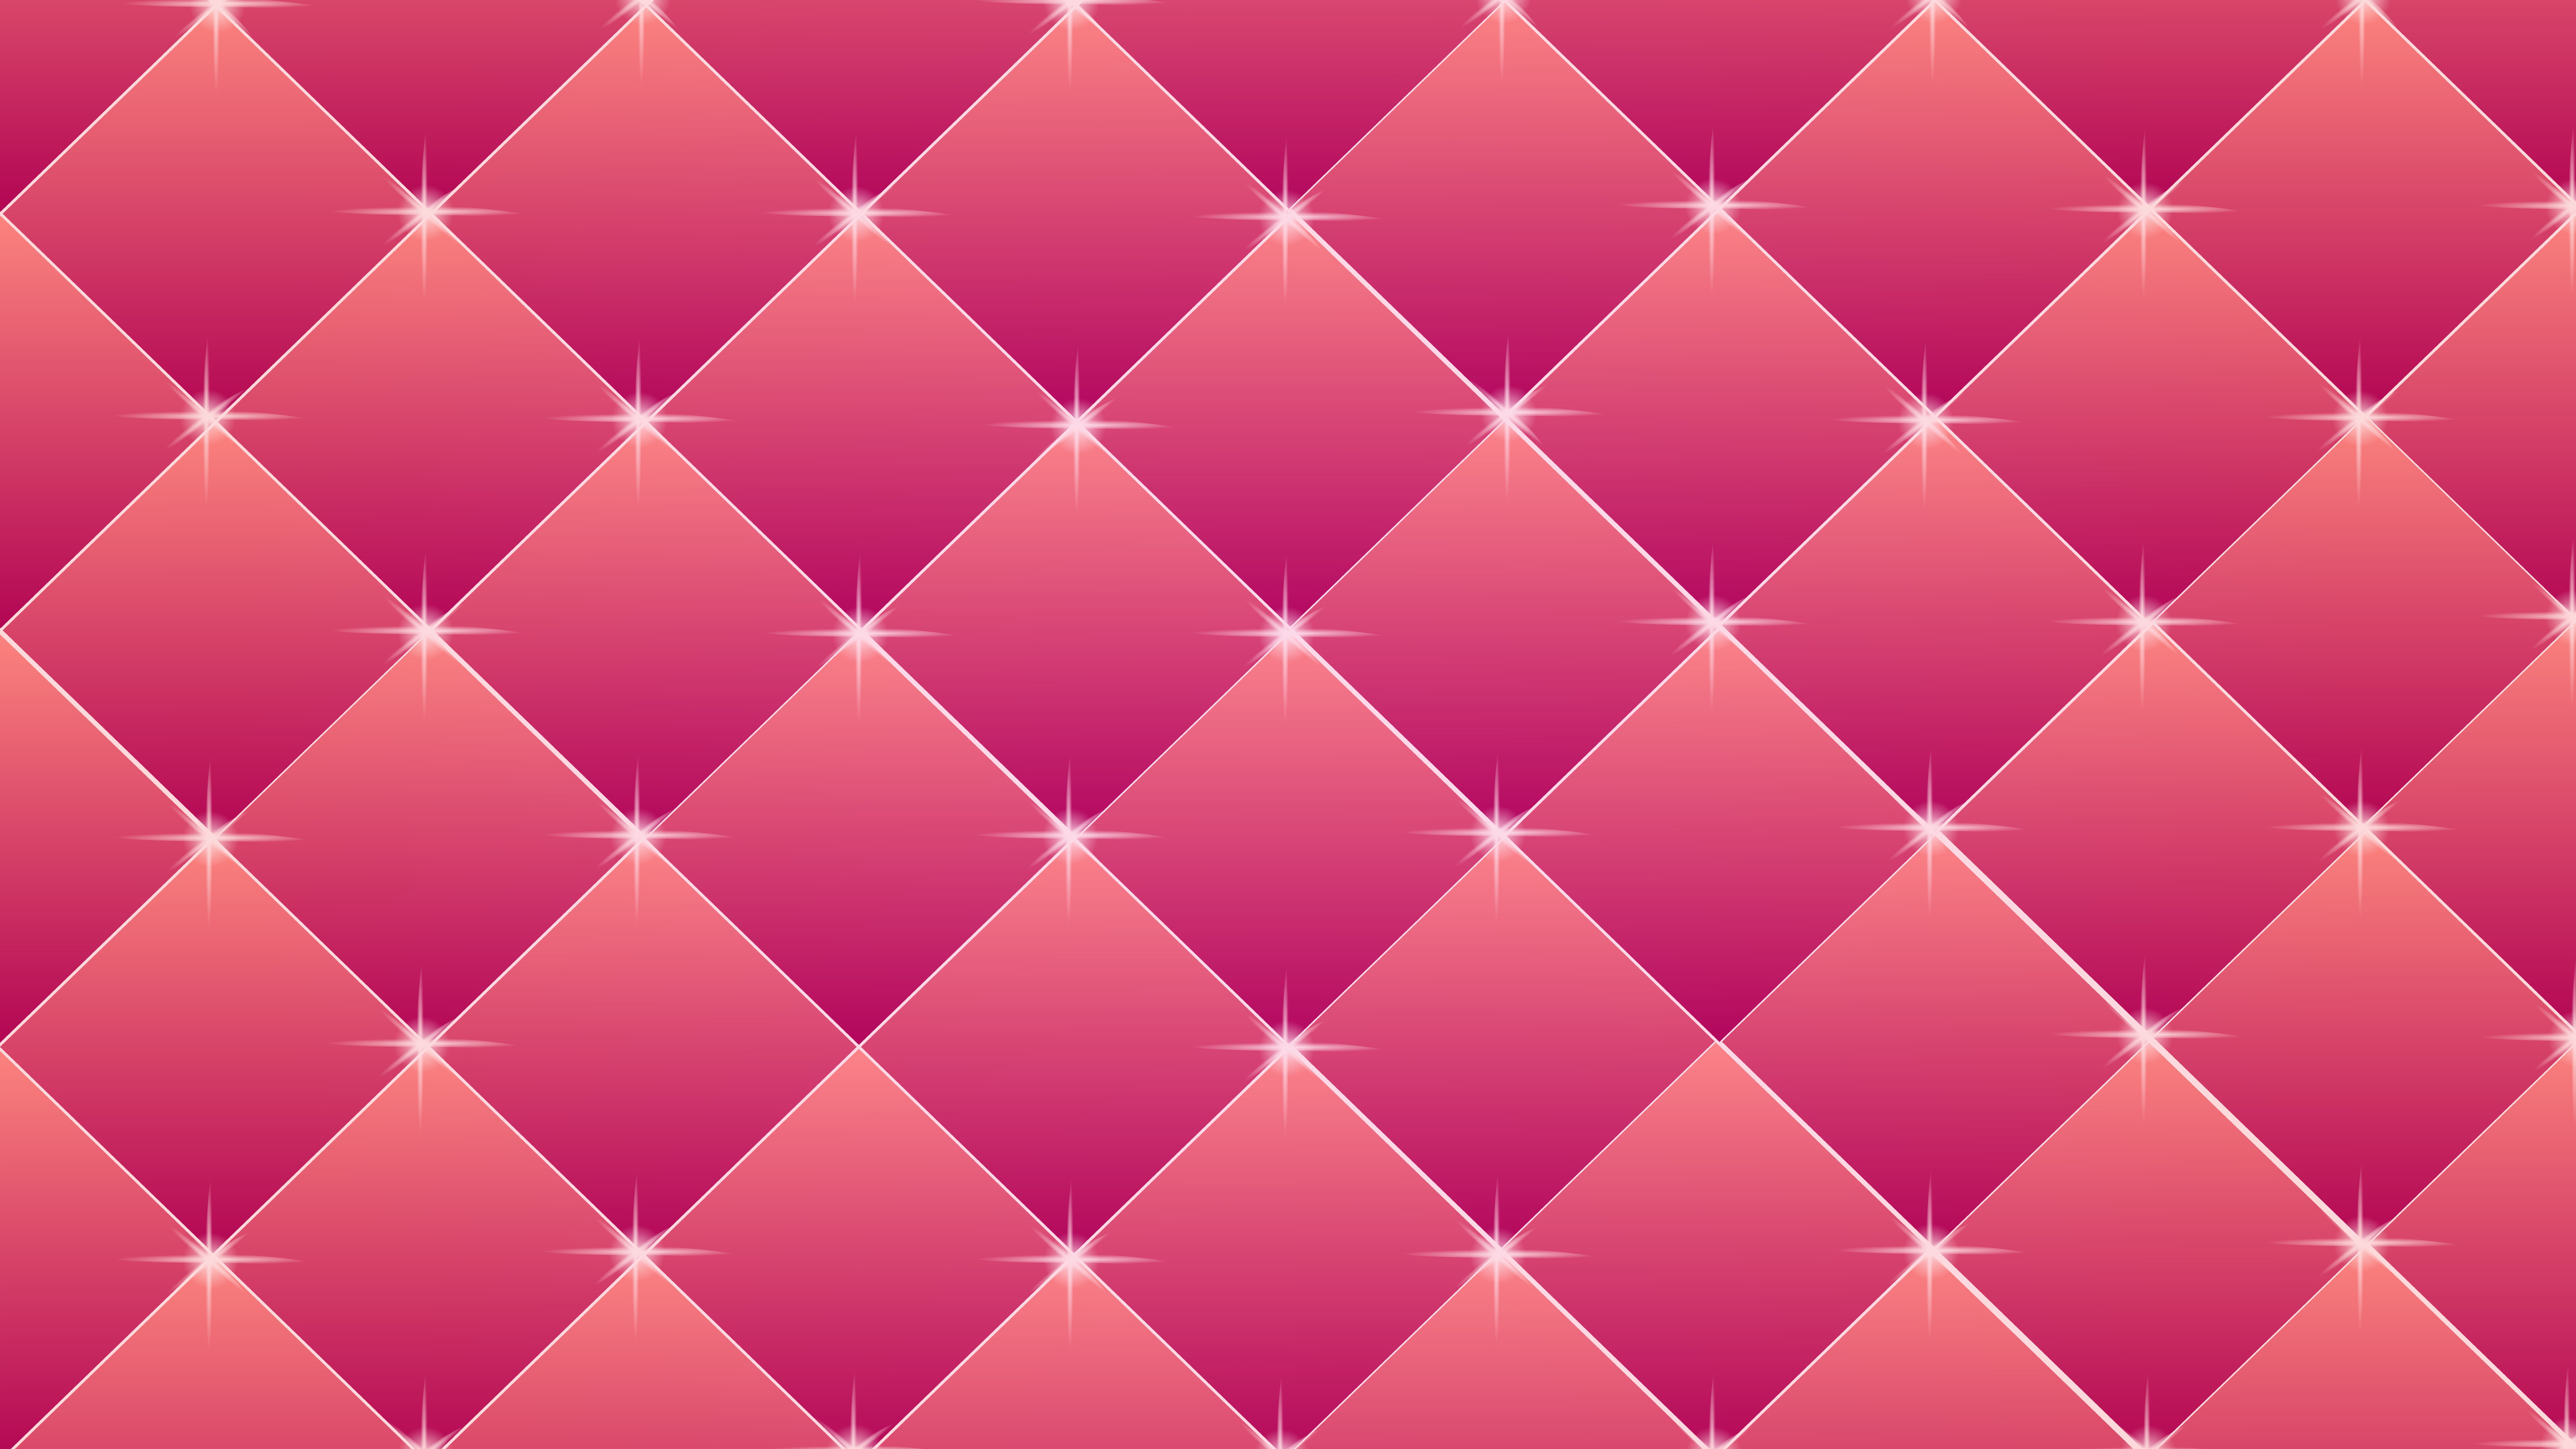 Wallpapers squares rhombuses pink on the desktop